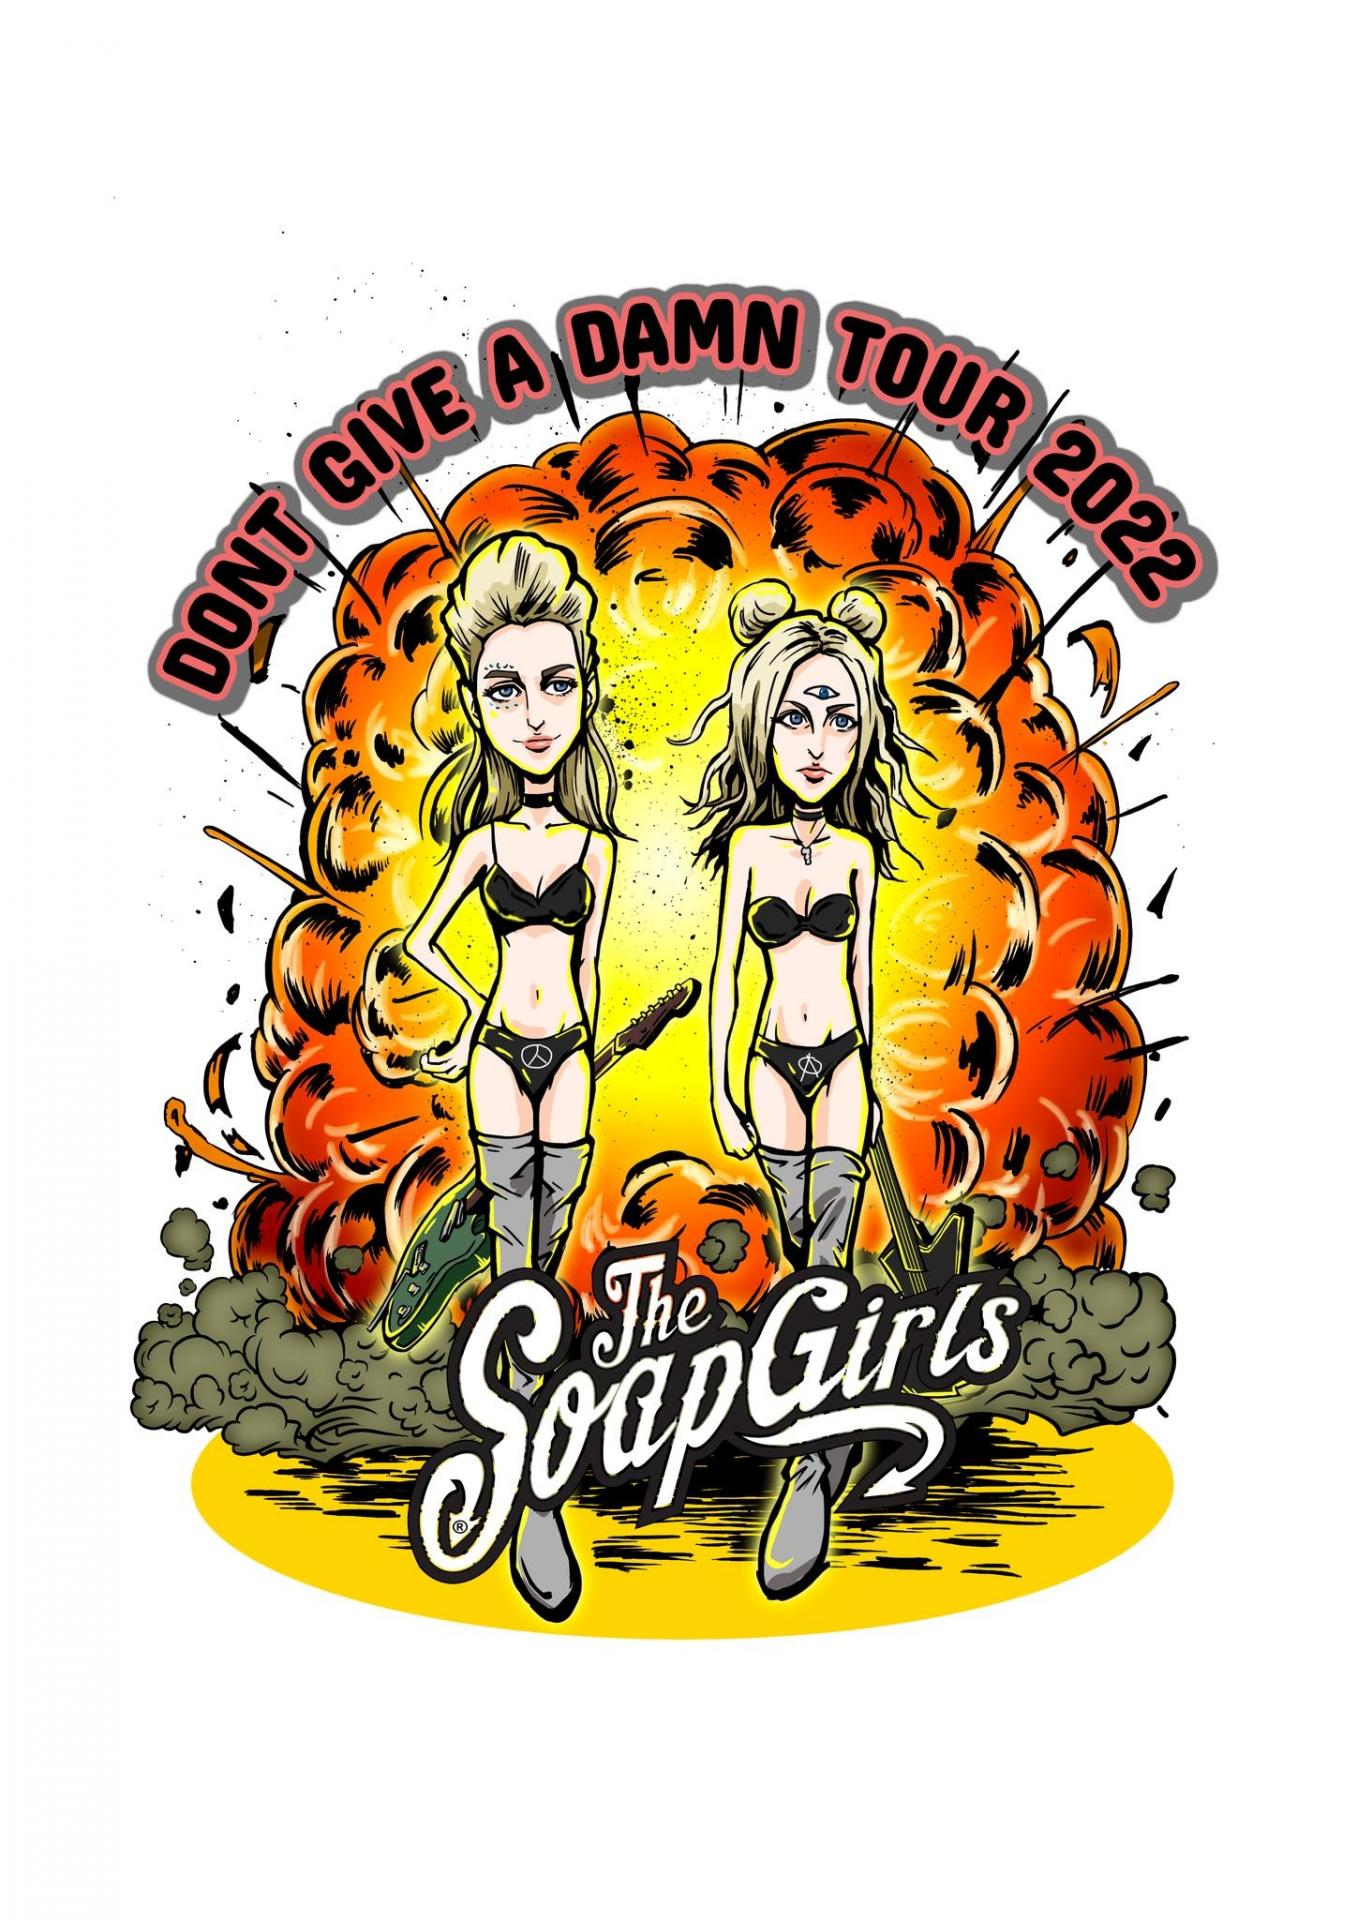 The soapgirls tour